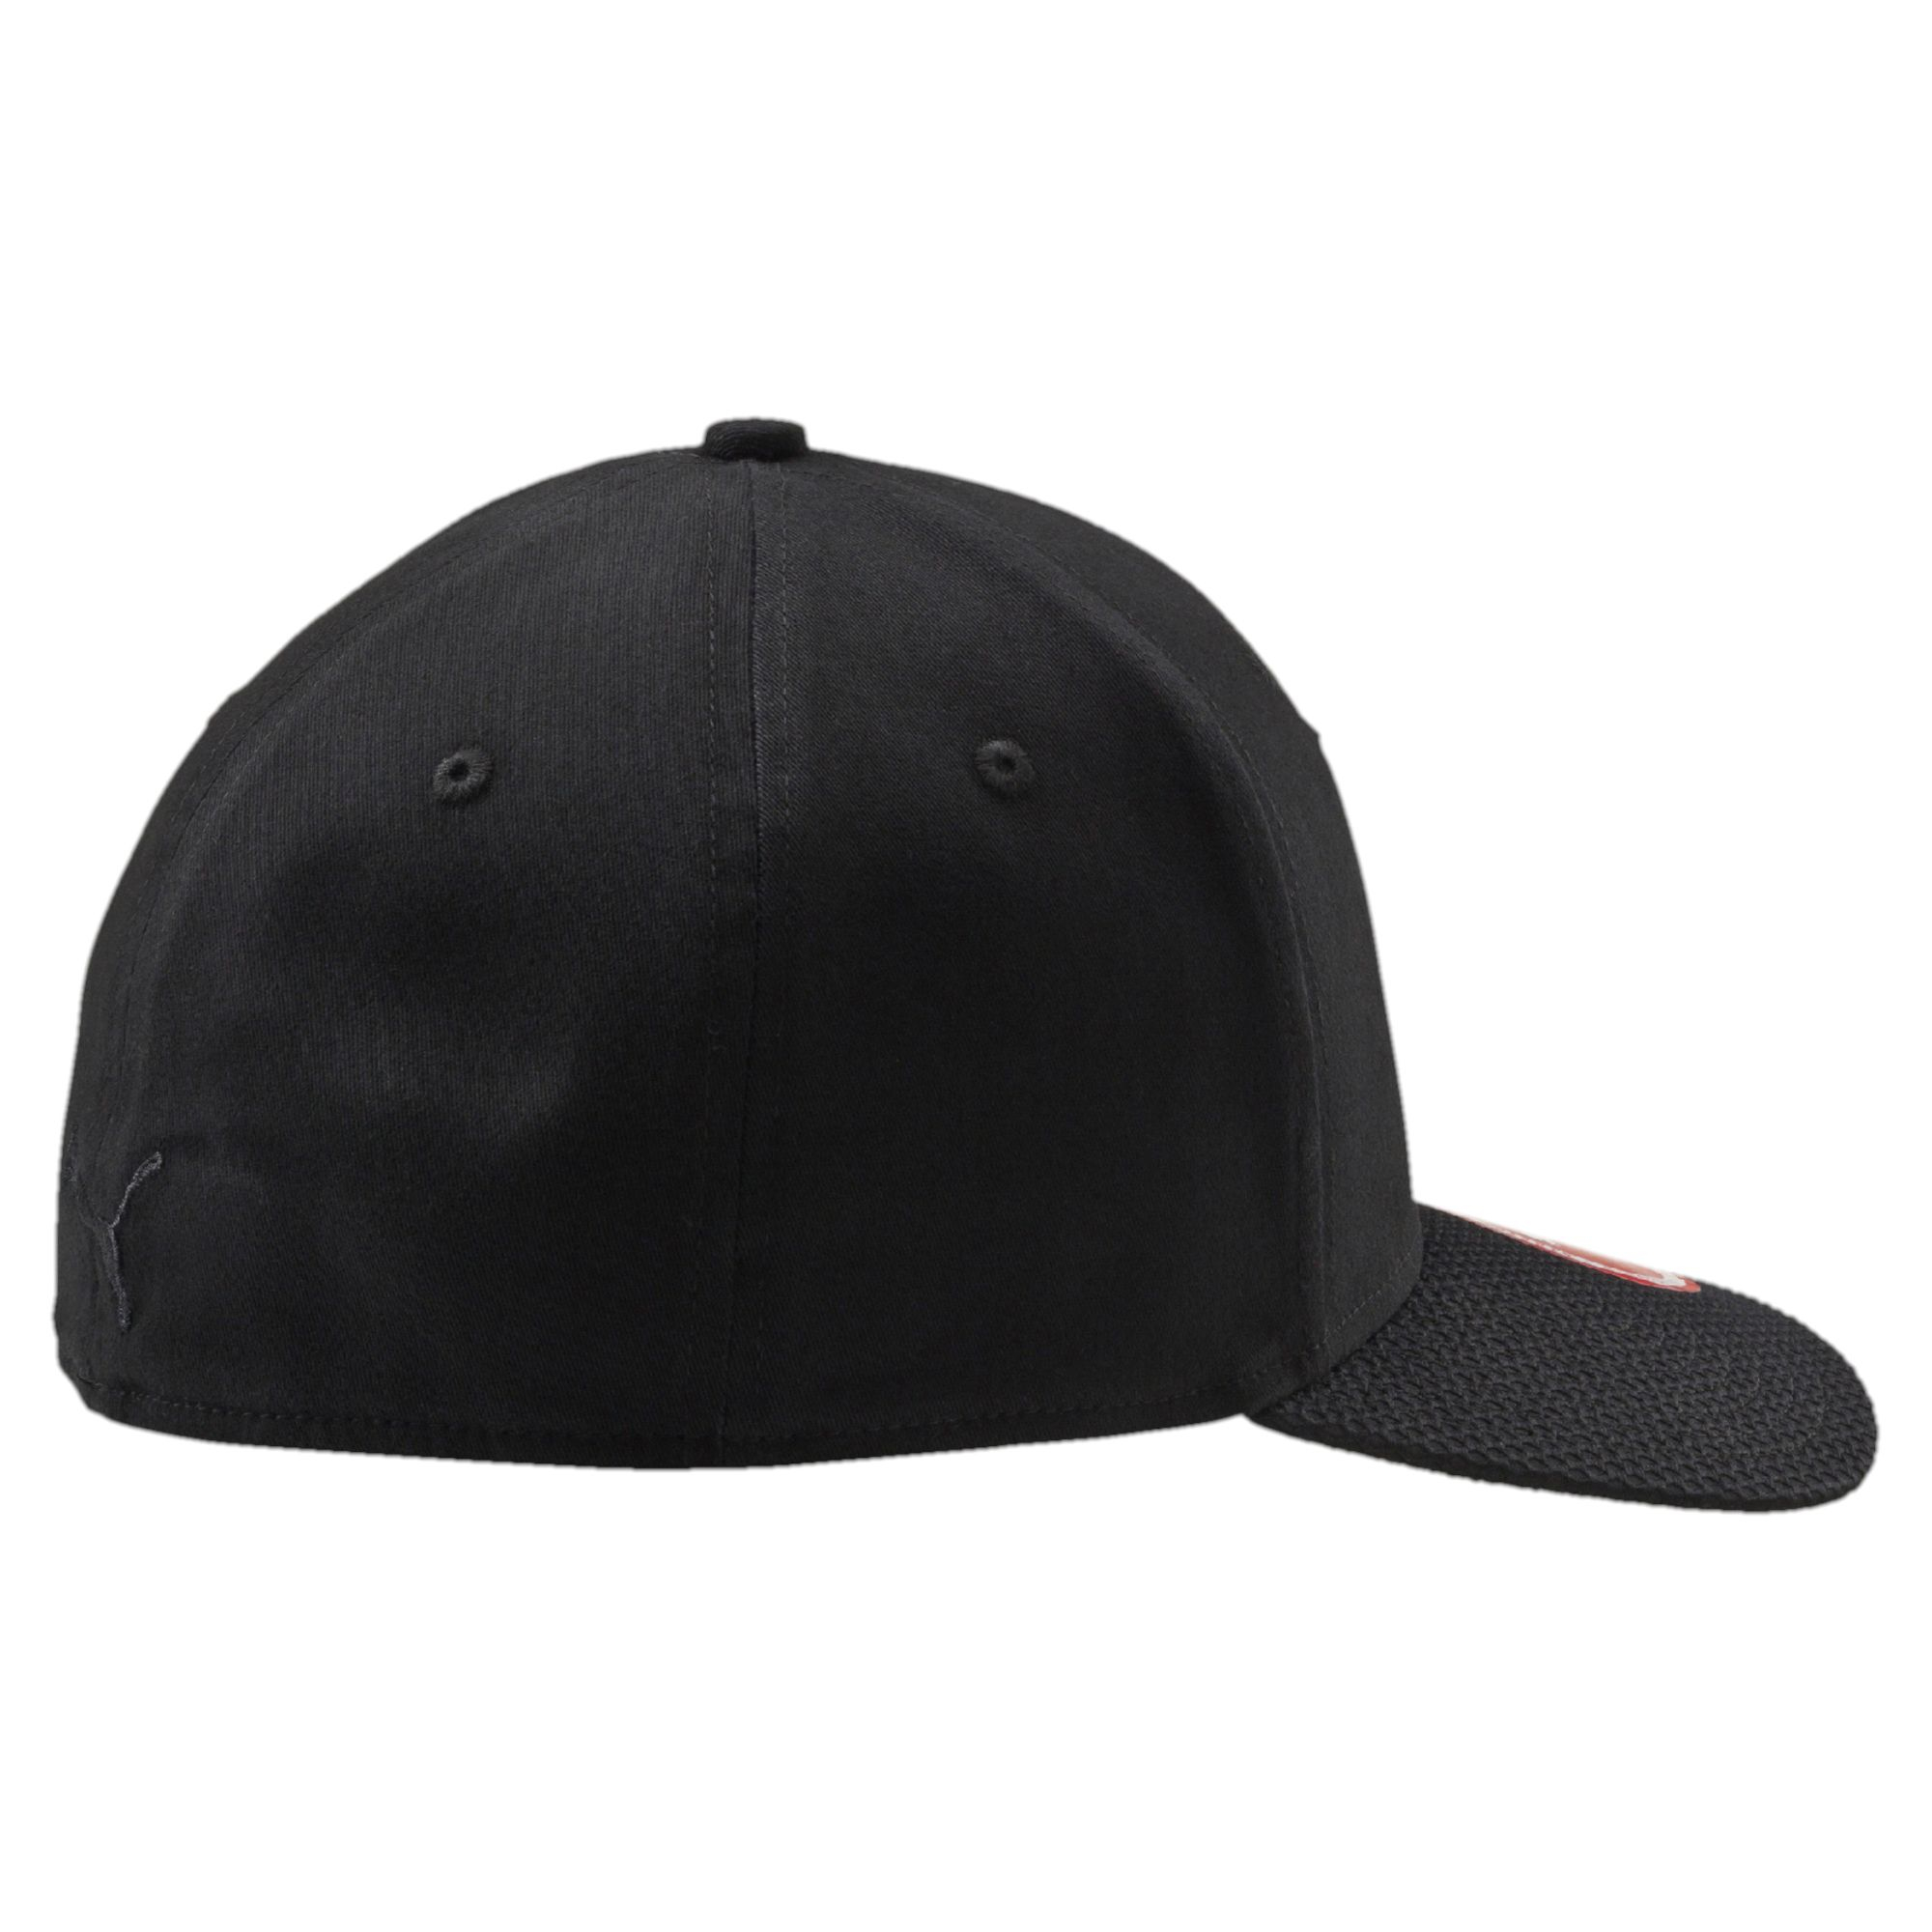 PUMA Cotton Ferrari First Fitted Hat in Black for Men - Lyst